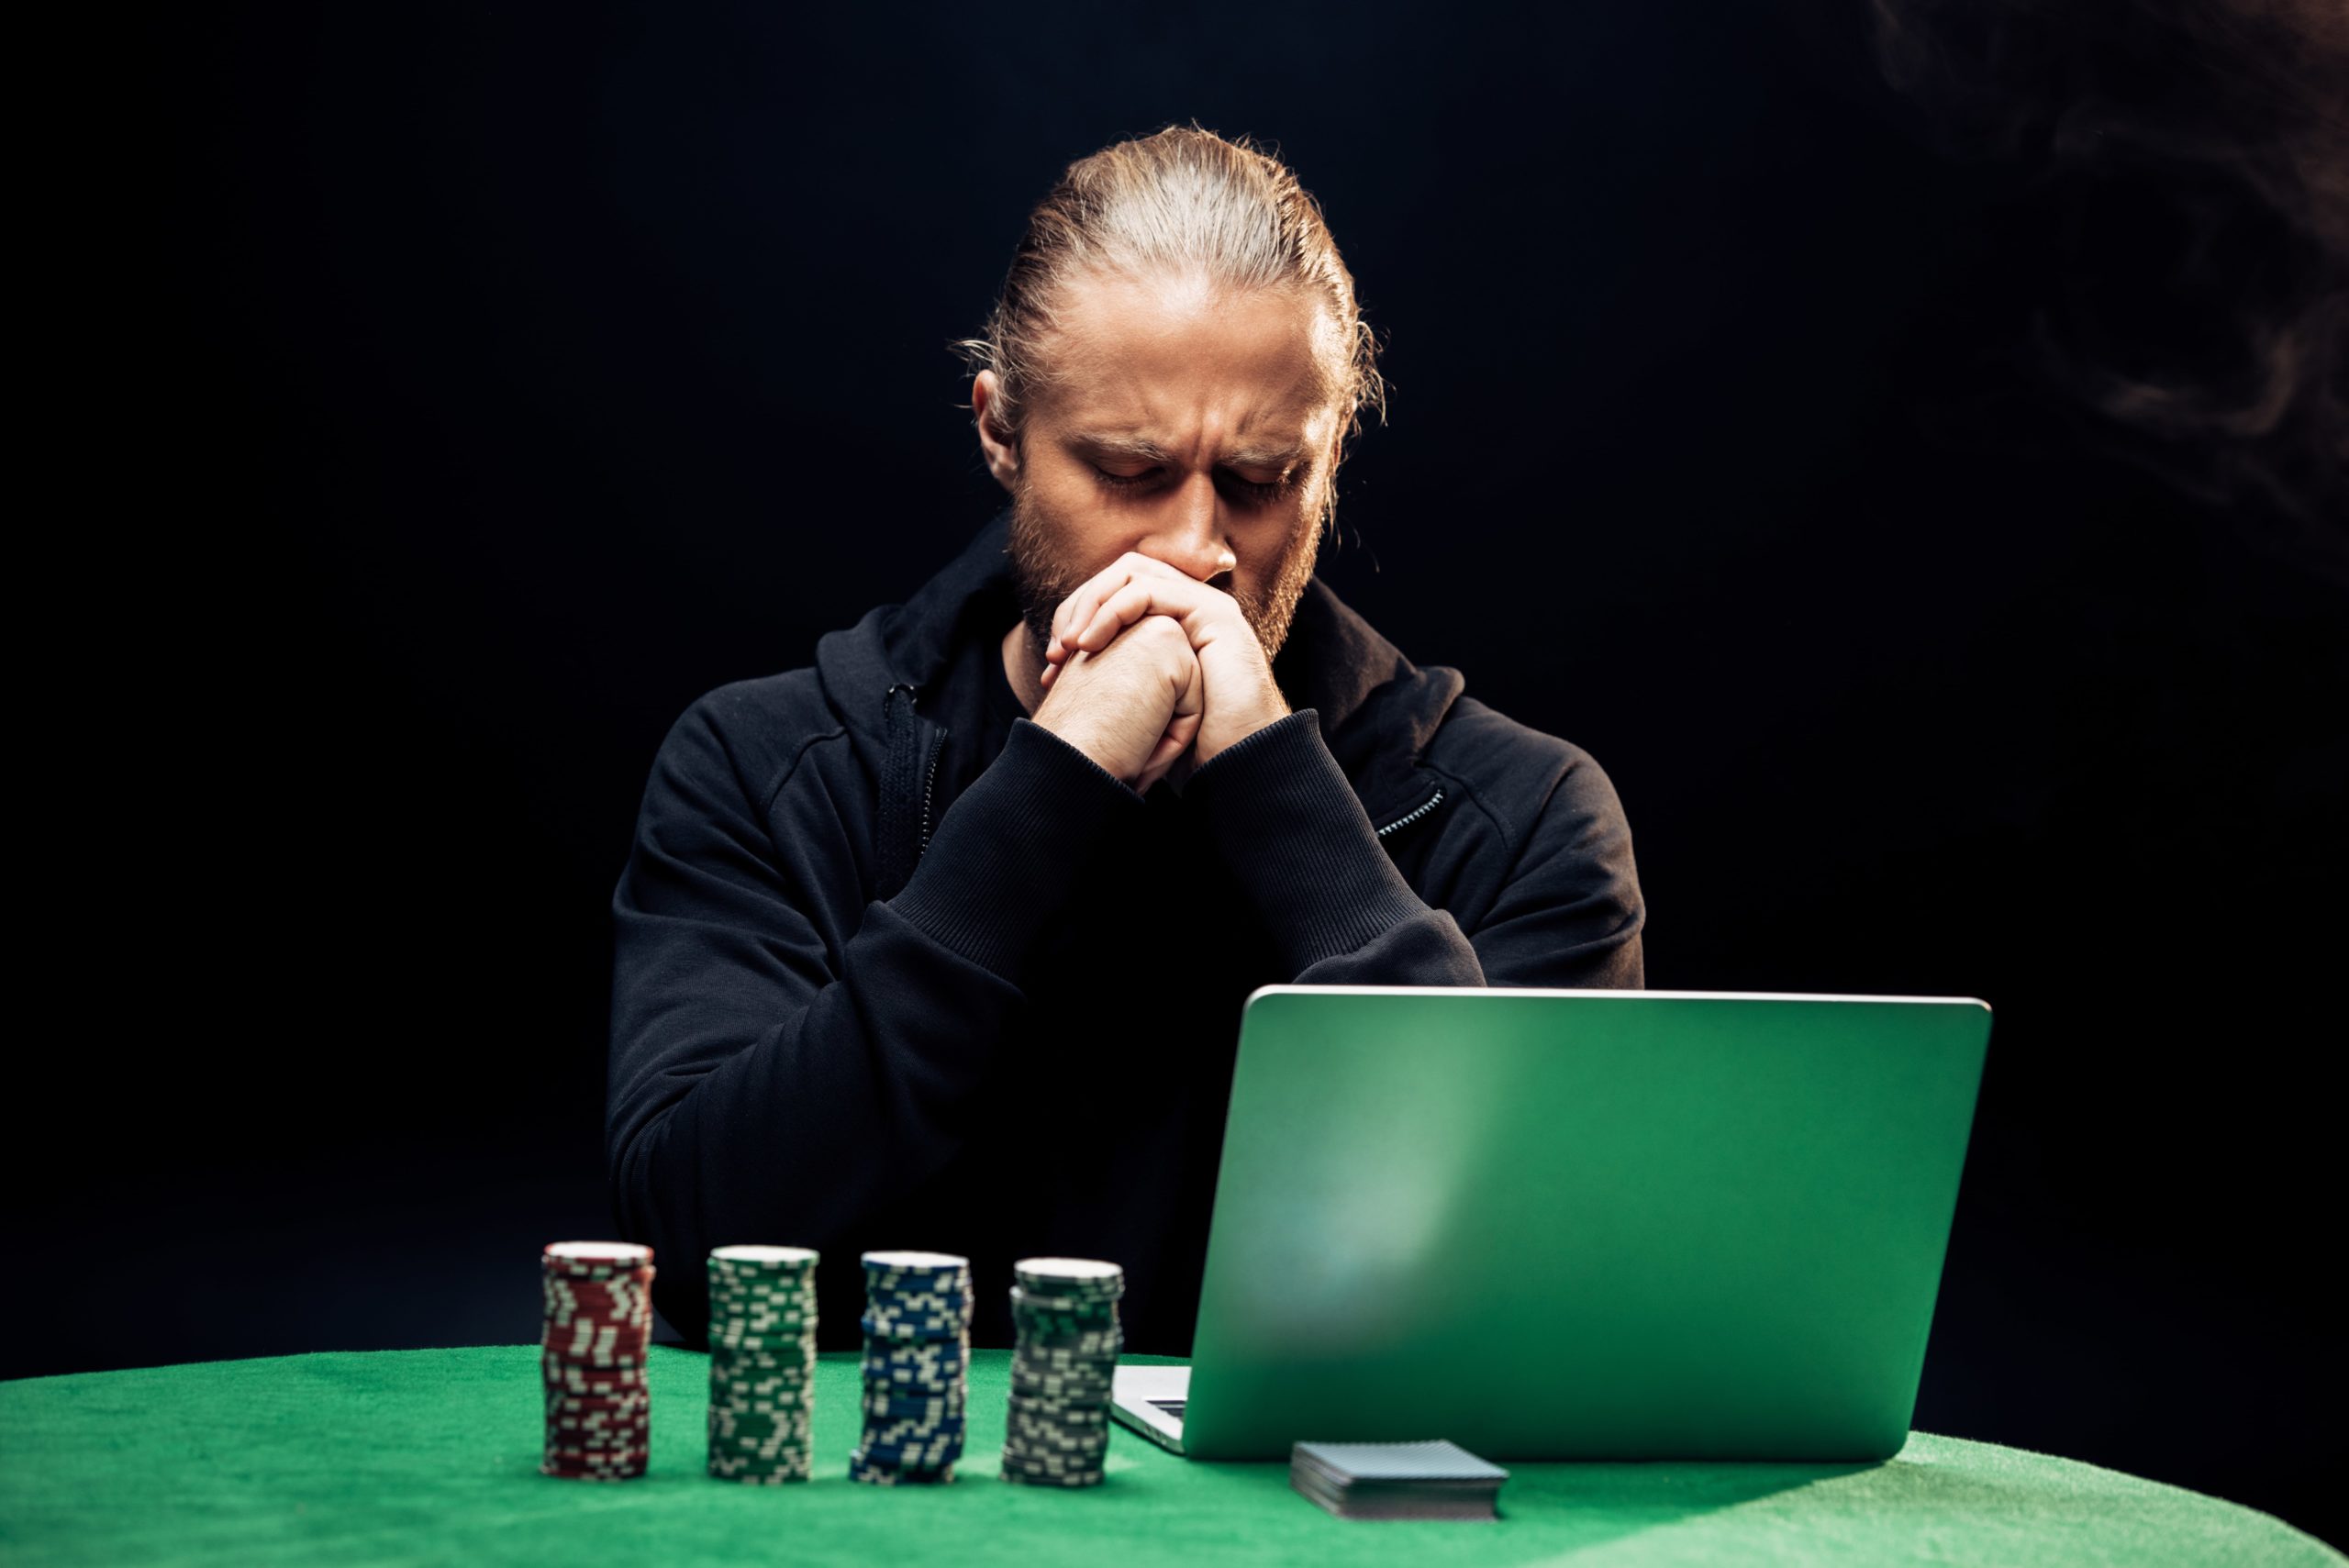 Cesta za úspechom: 7 zlatých pravidiel pre online blackjack